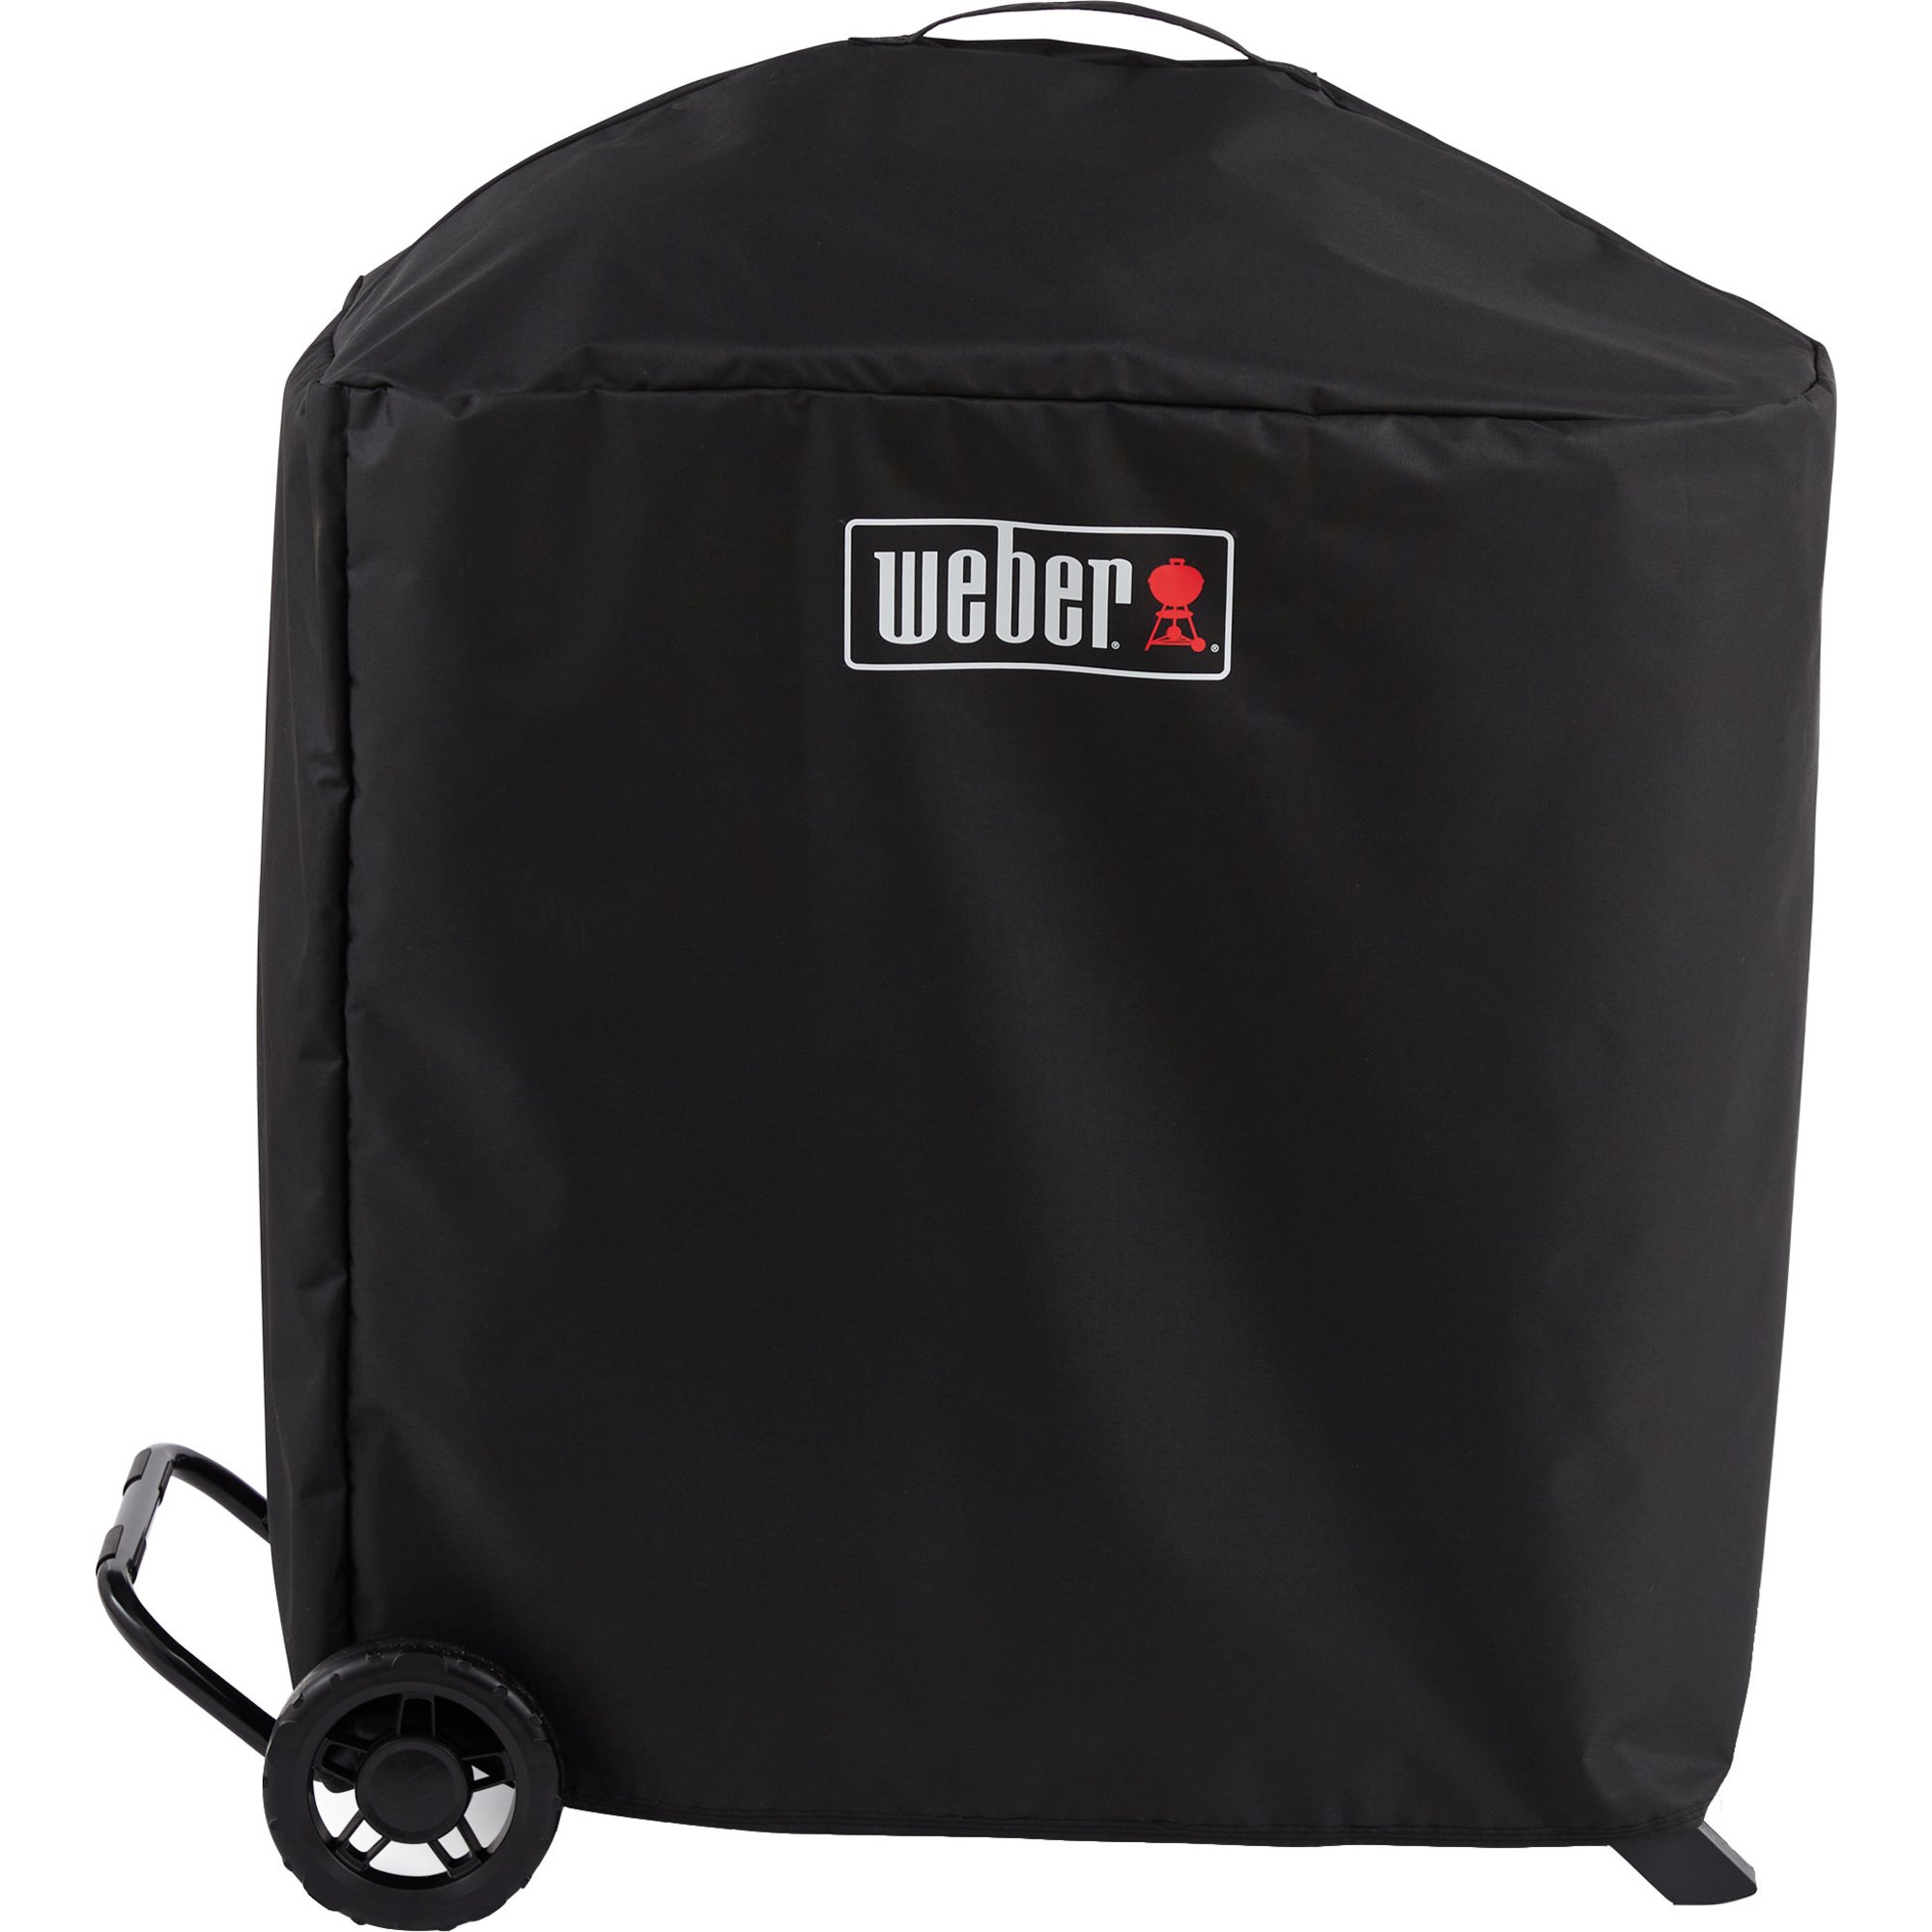 Weber Traveler Compact Premium grillöverdrag